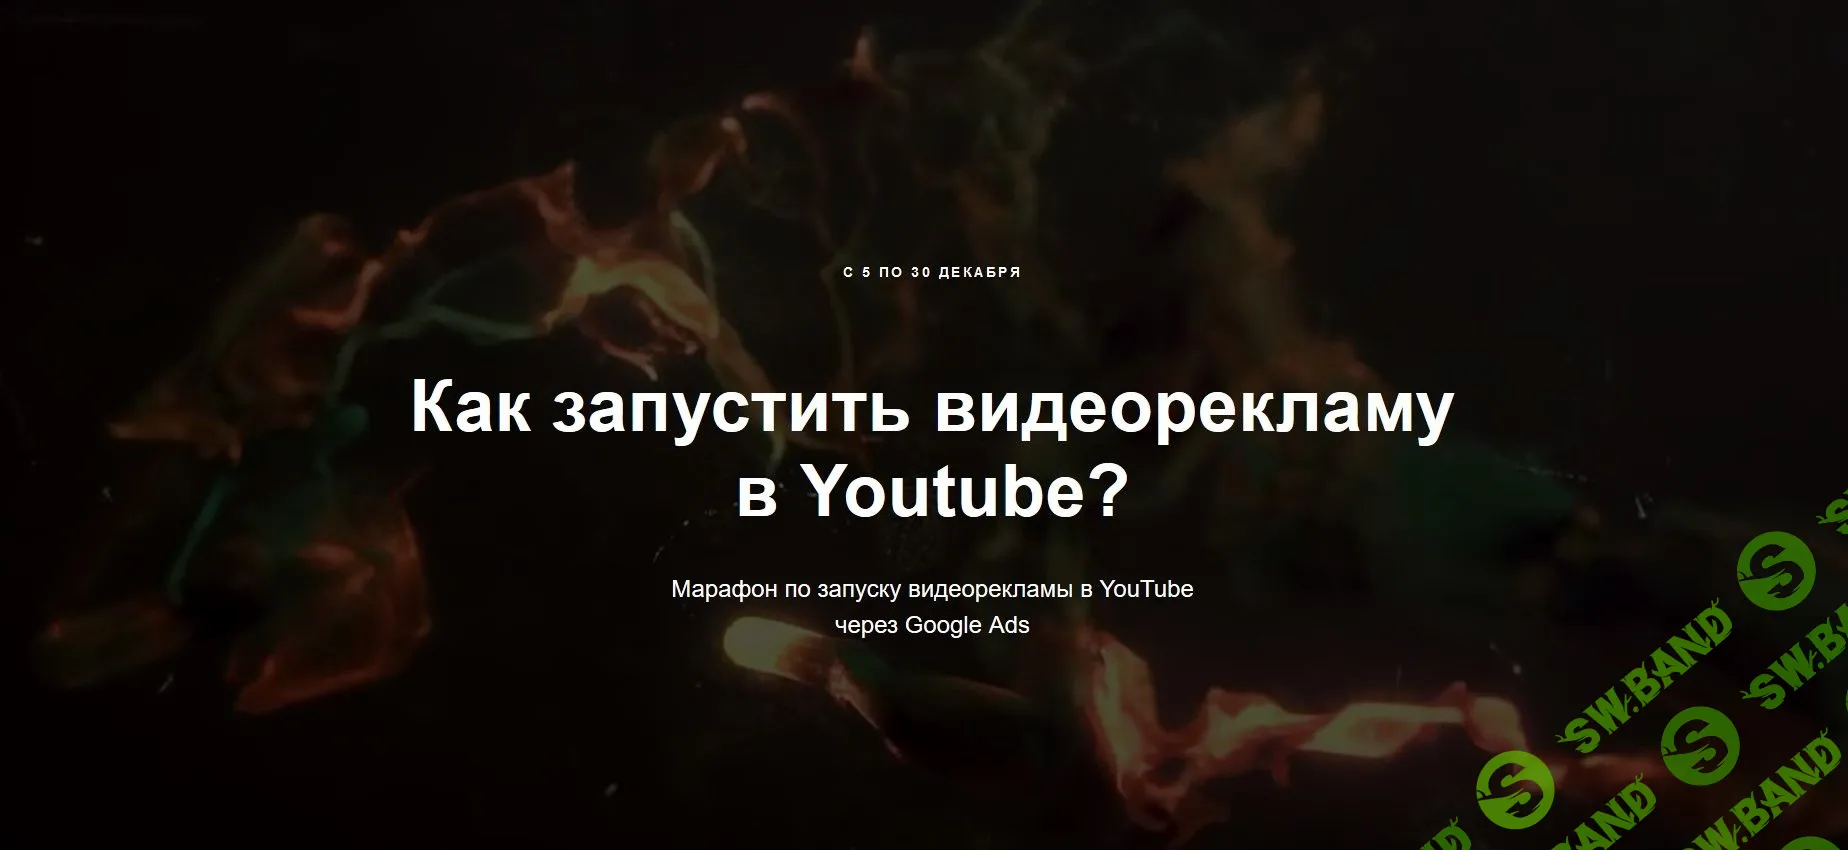 [Айнур Талгаев] Как запустить видеорекламу в Youtube? (2019)